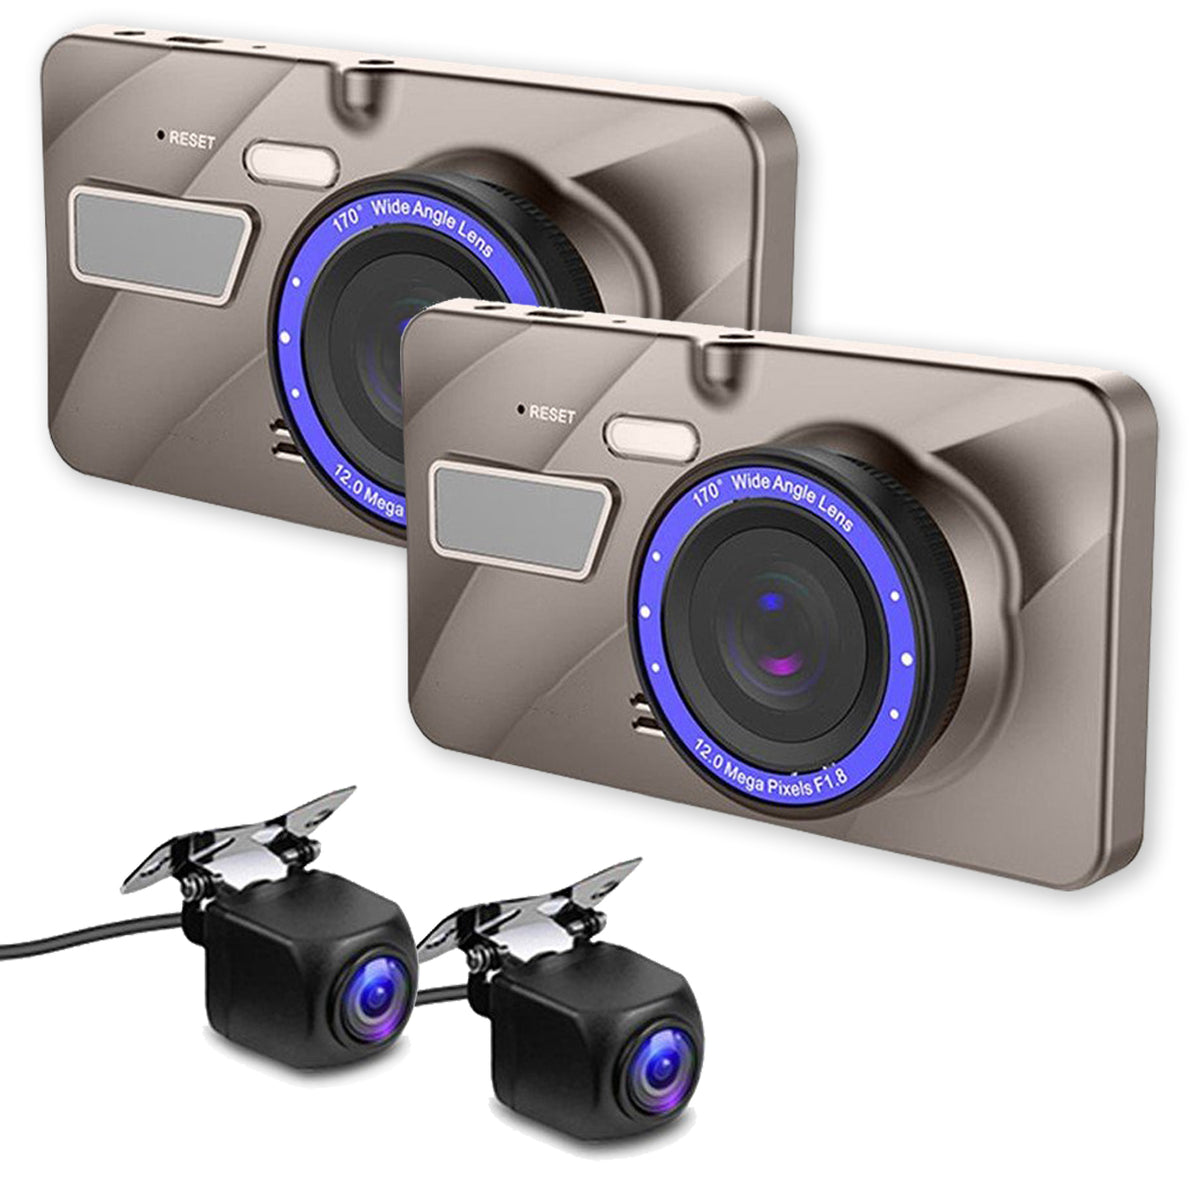 Yabdbg Dashcam Quad camera 1080p Full HD GPS 360 degrés